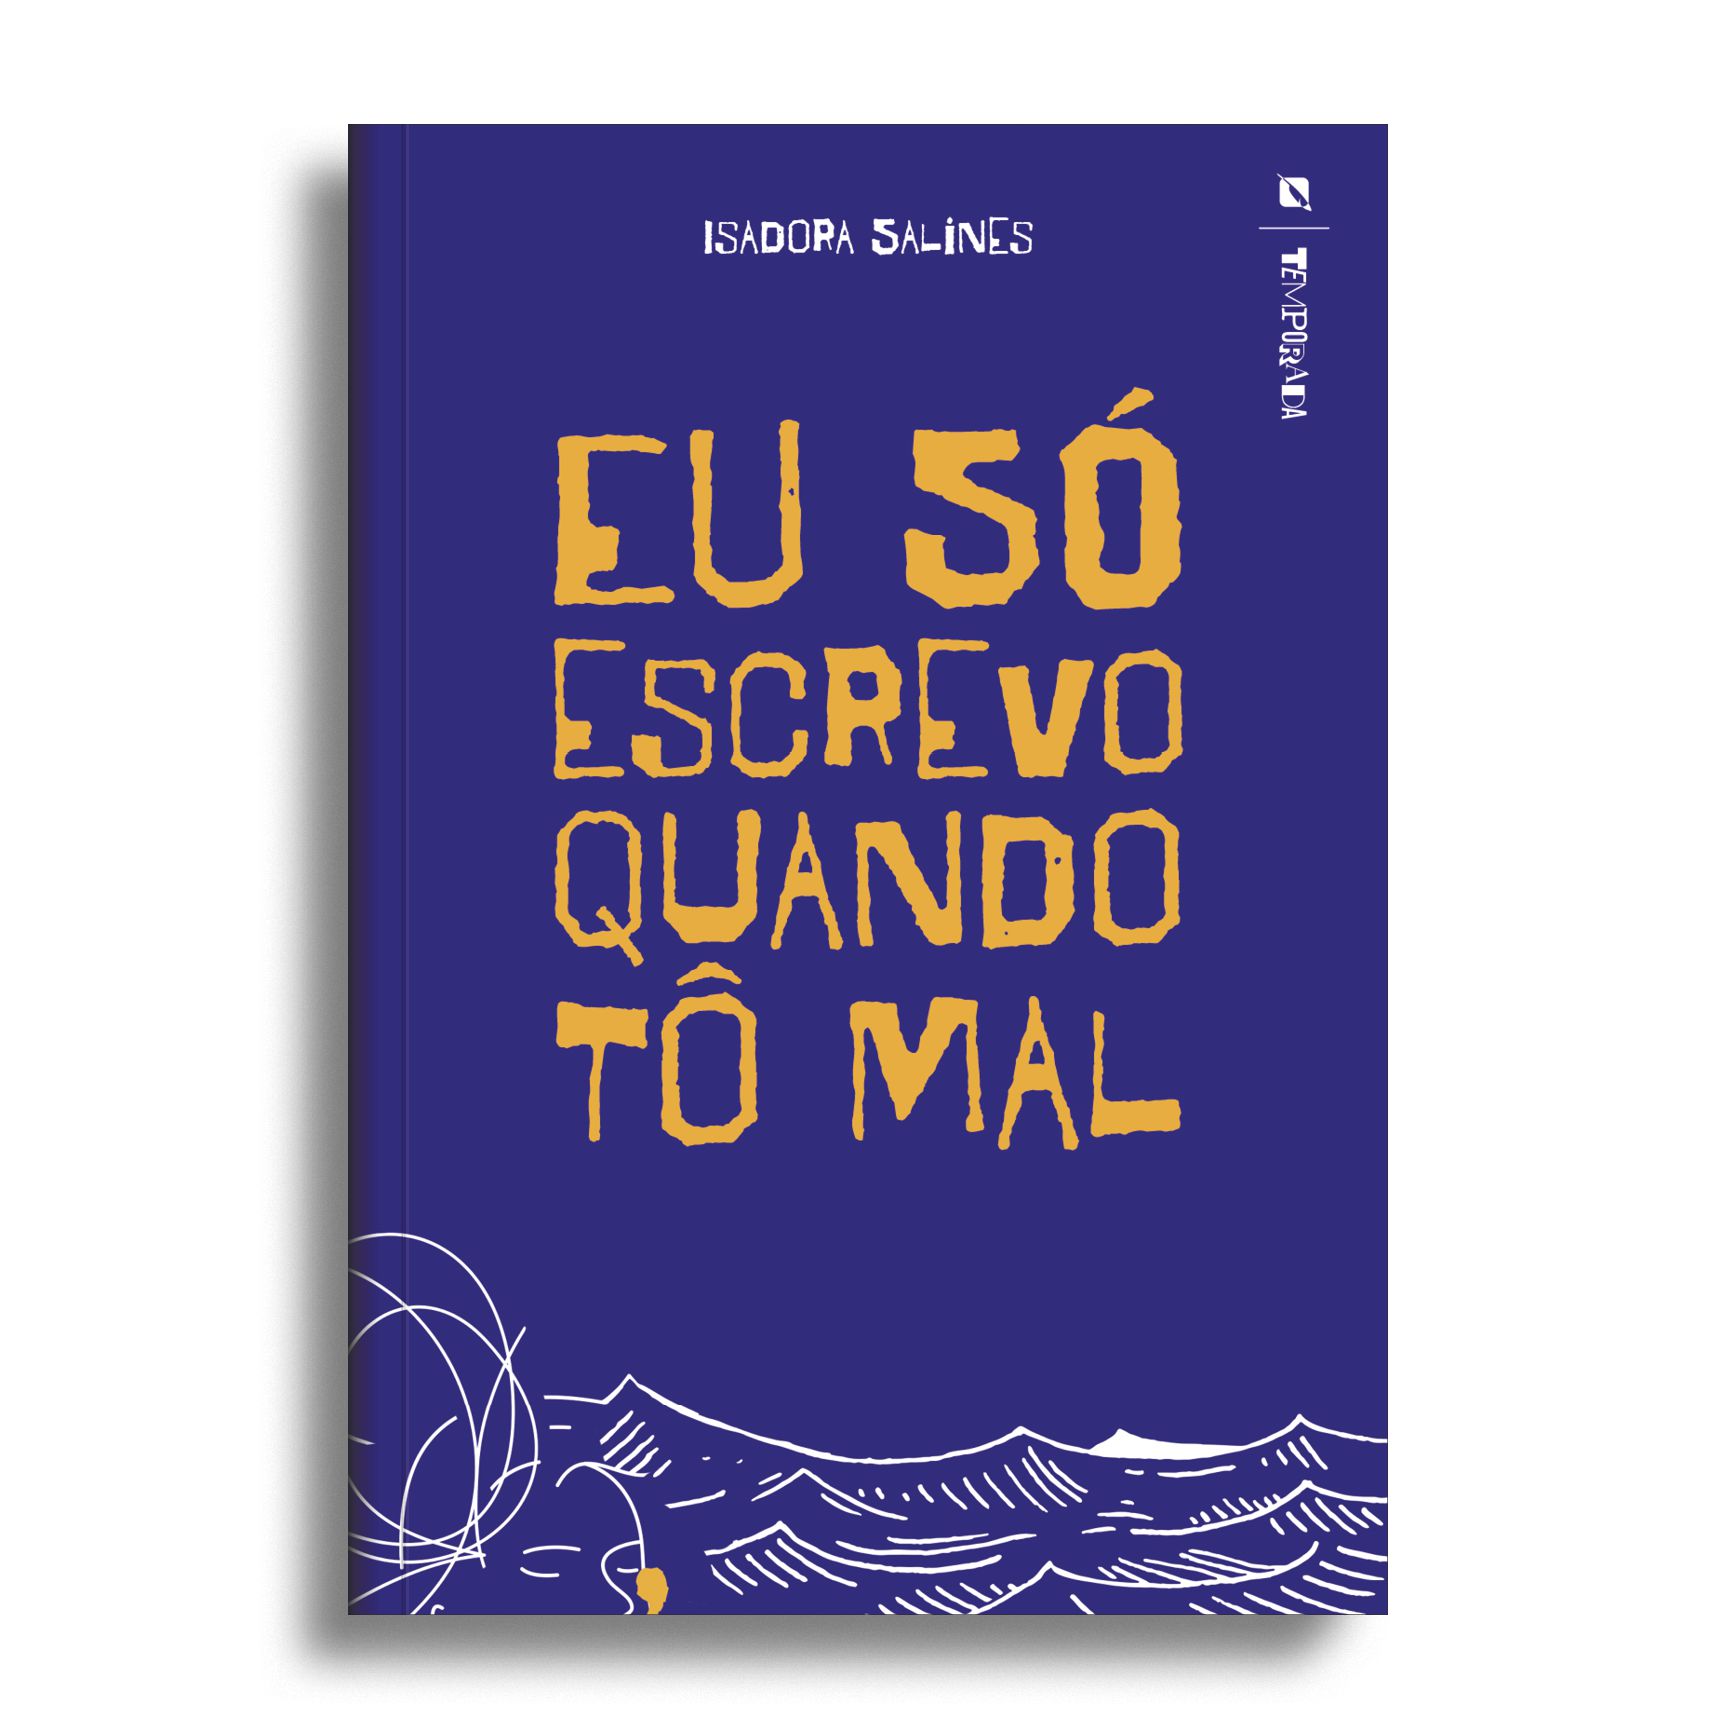 João Márcio on Tumblr